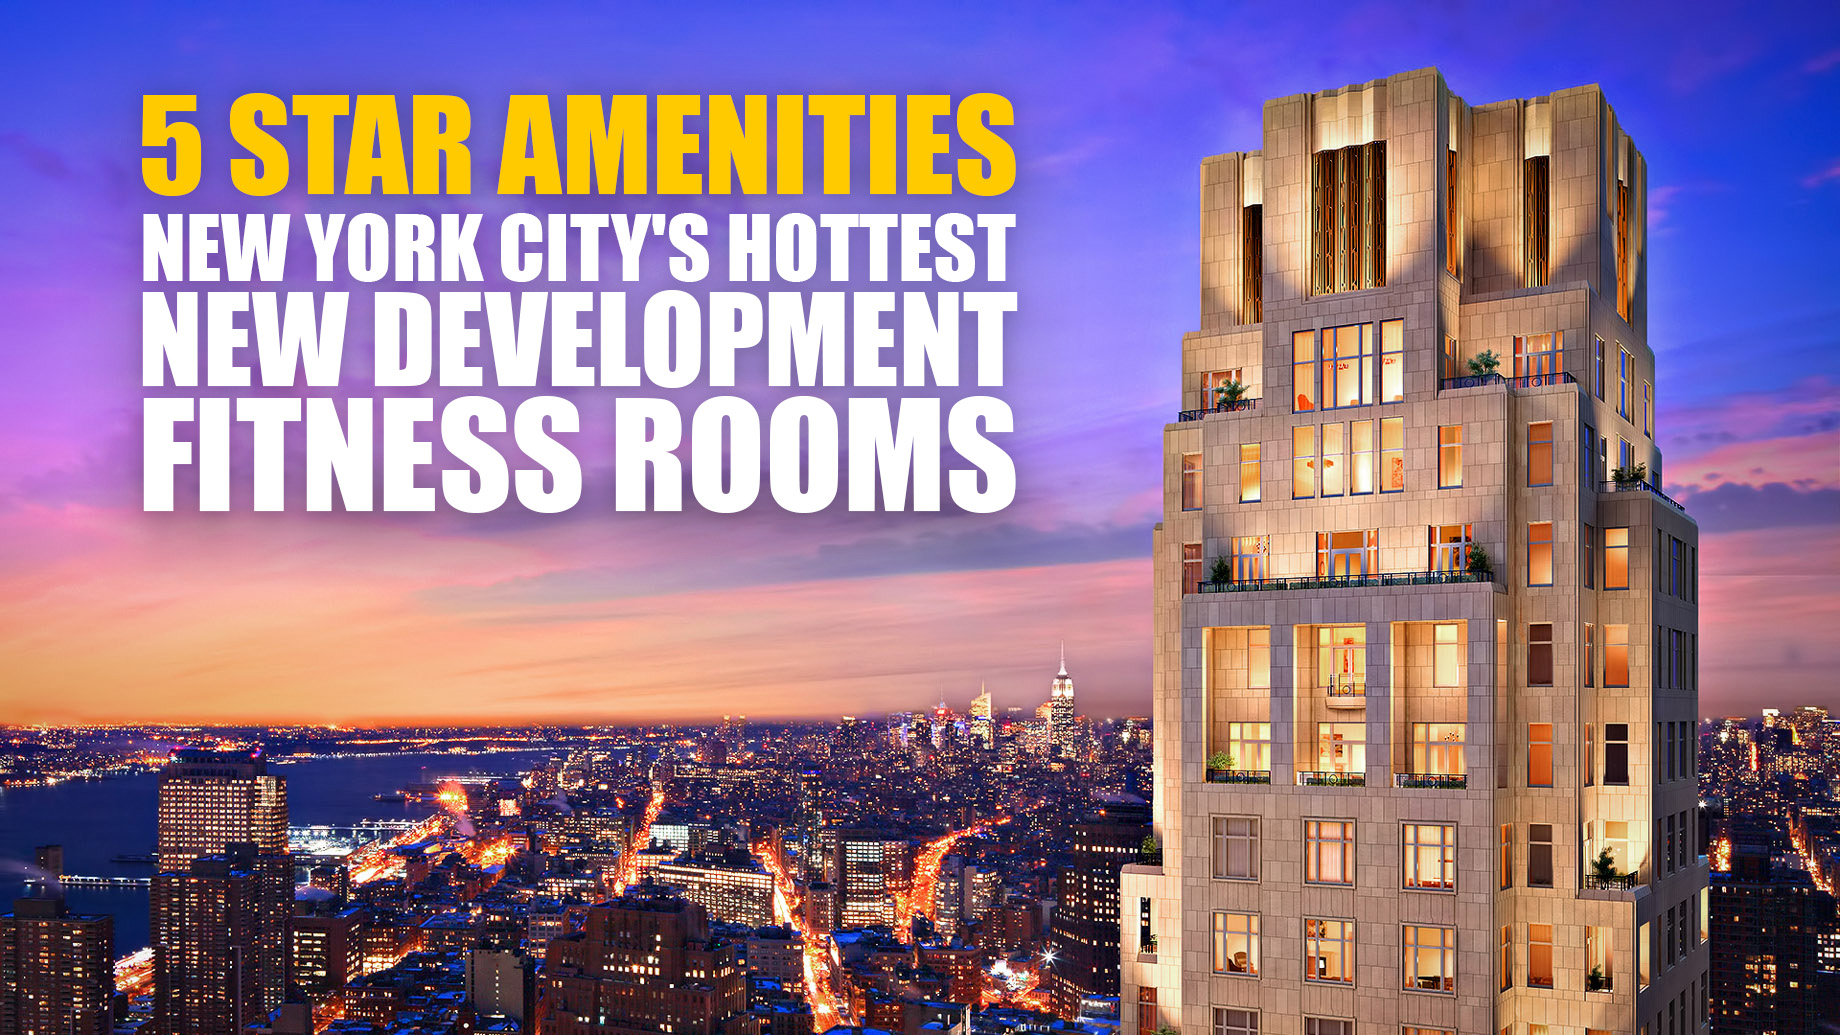 5 Star Amenities – New York City’s Hottest New Development Fitness Rooms